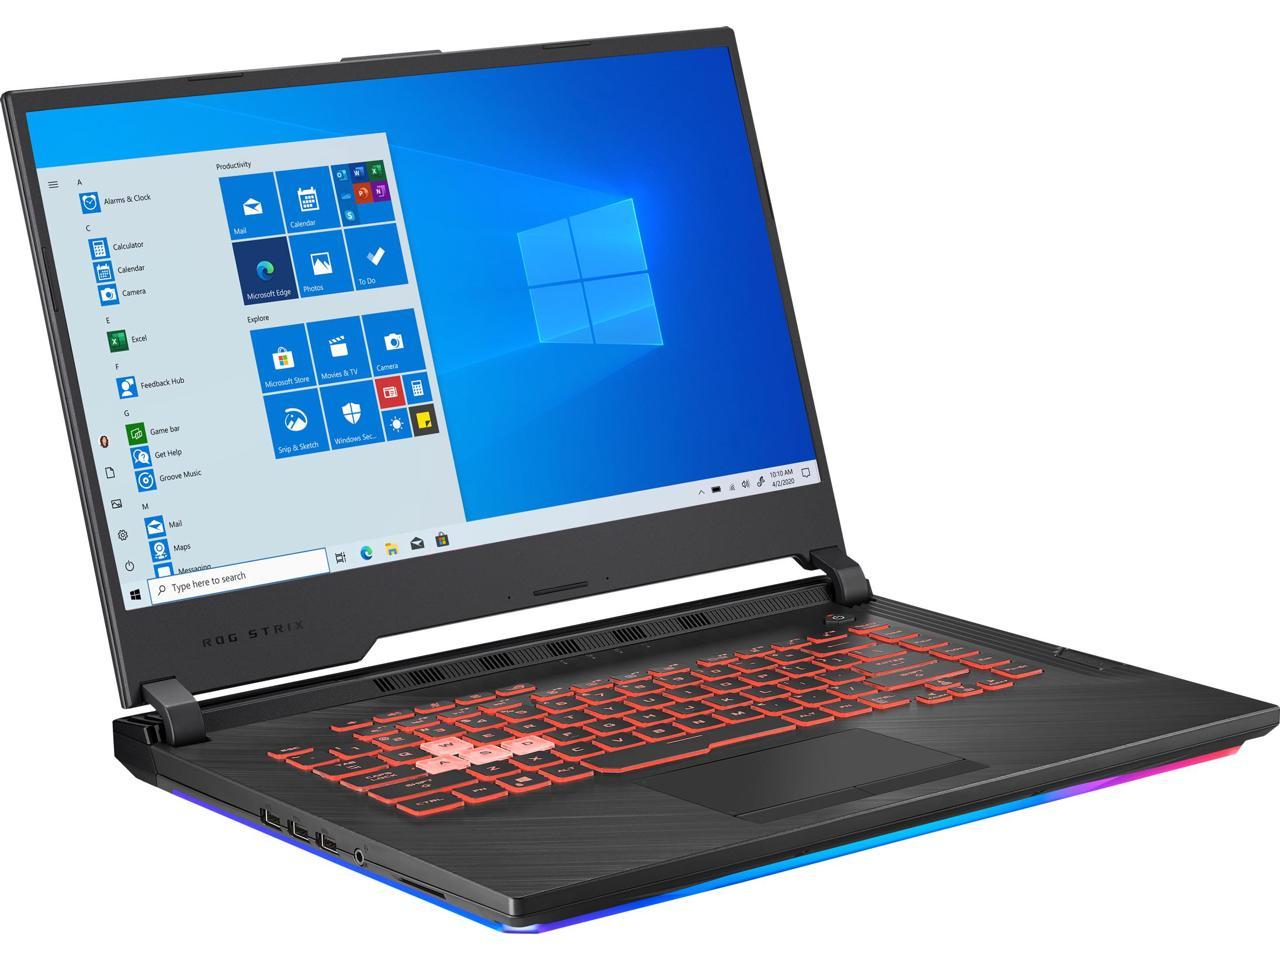 ASUS ROG Strix G Gaming Laptop, 15.6-inch Full HD display, Intel i7 9th